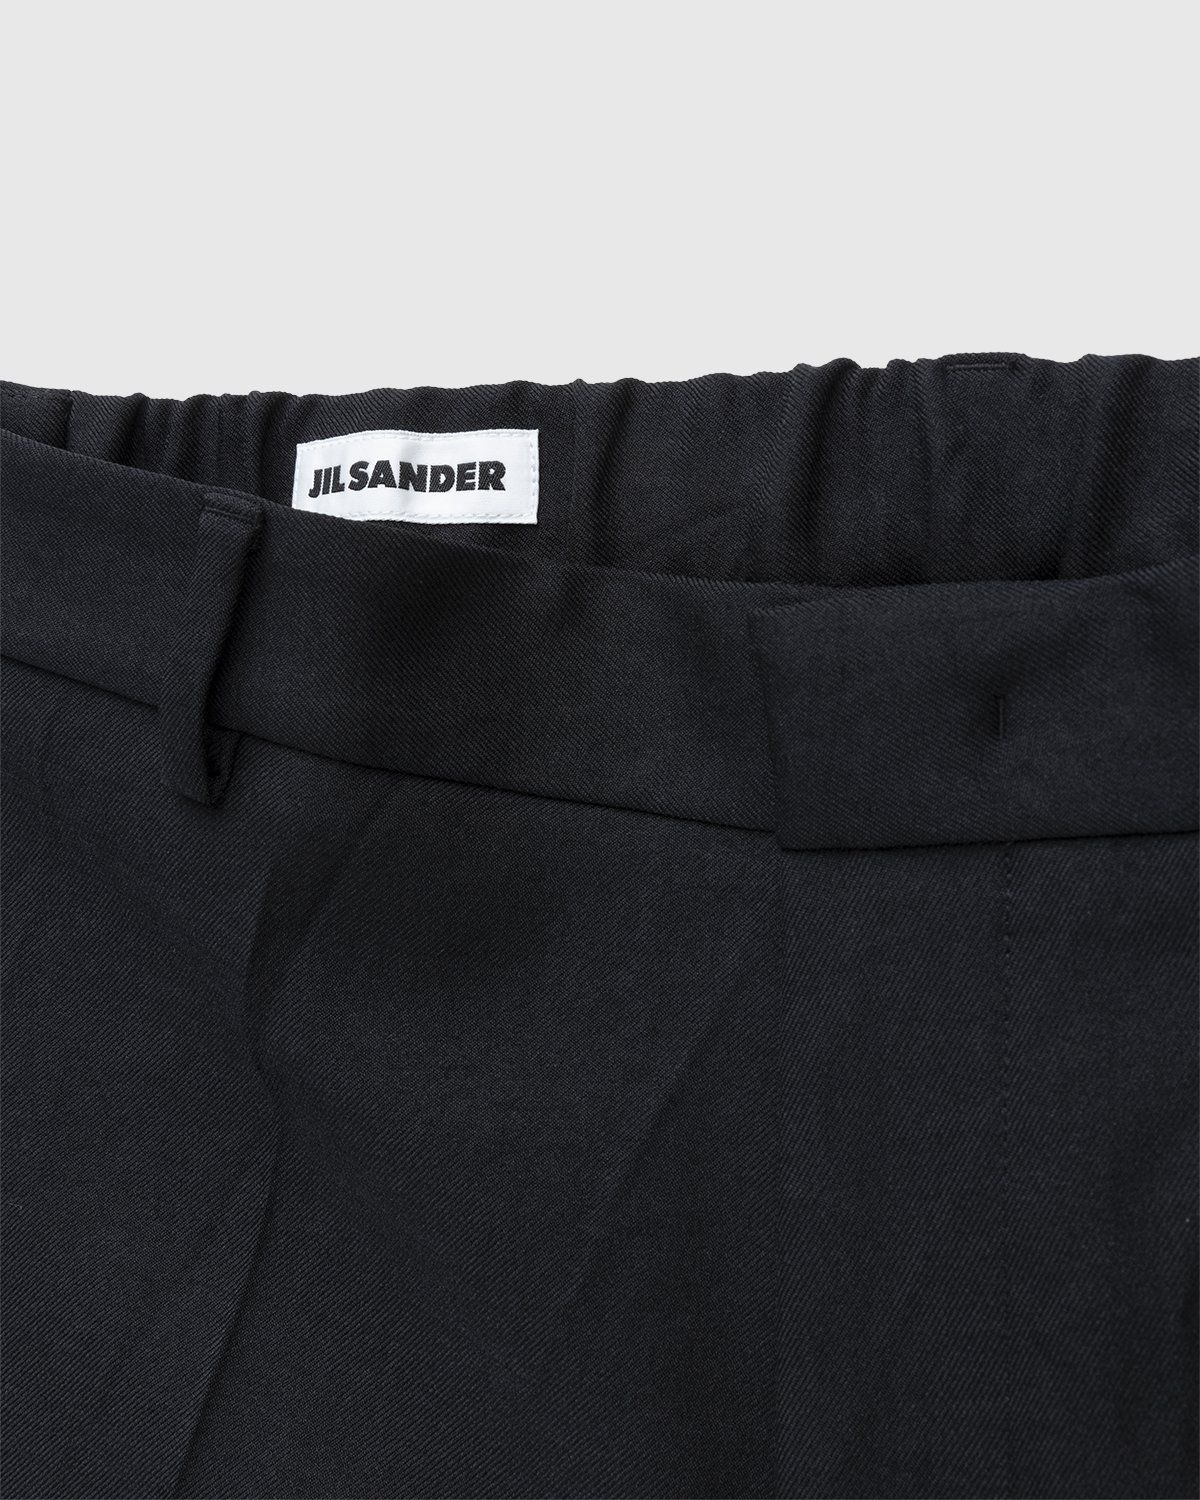 Jil Sander – Trousers Black - Pants - Black - Image 3